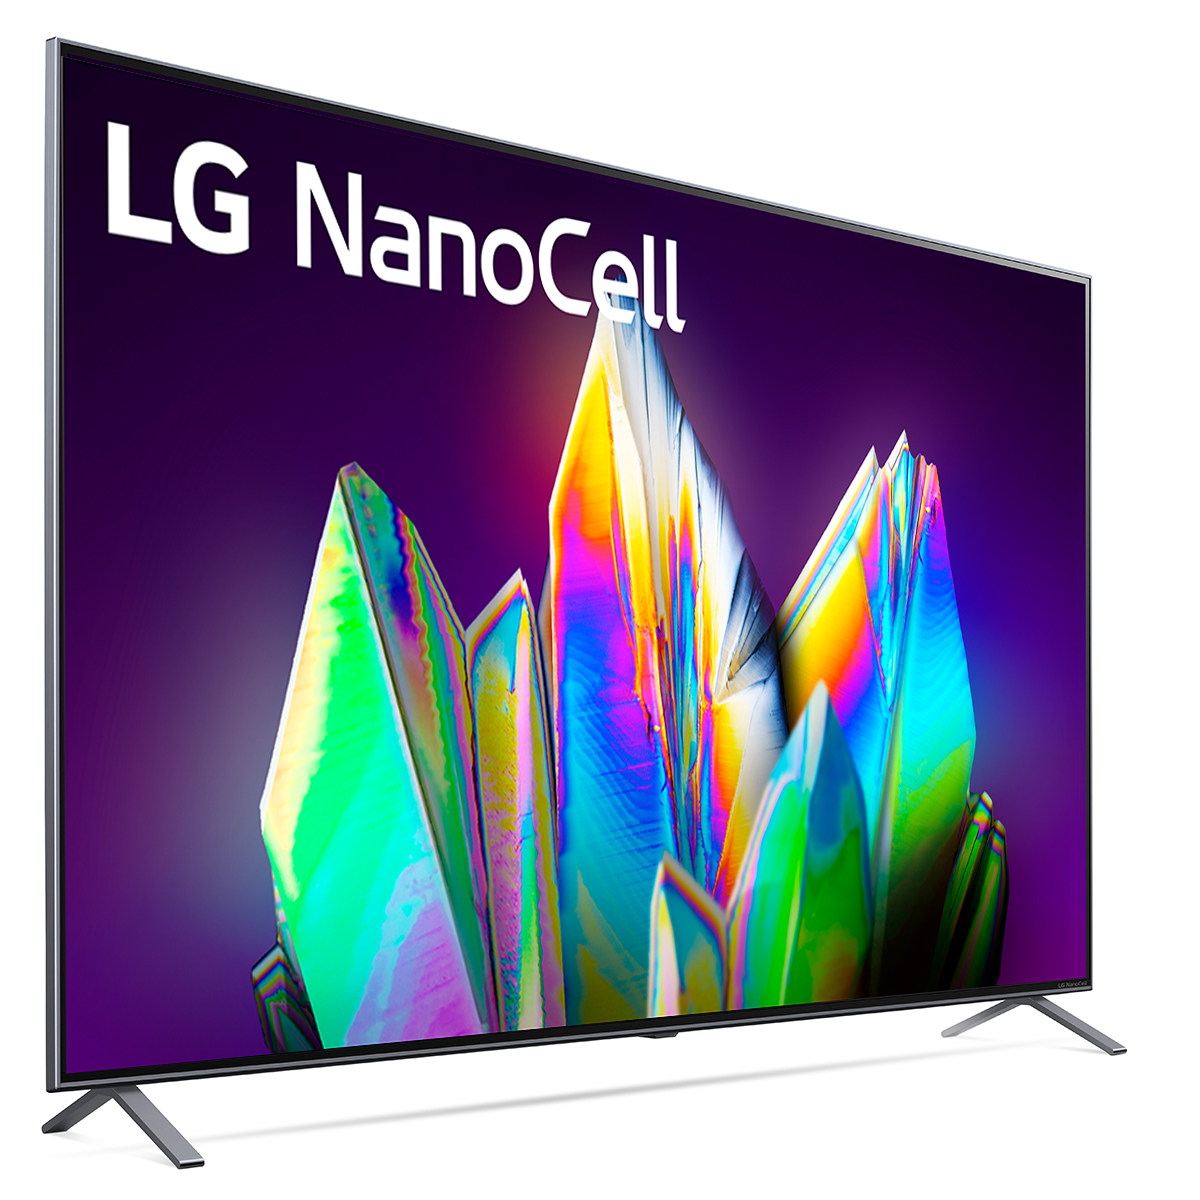 LG 65 Nano Cell 2020. Модельный ряд LG NANOCELL 2021. Запчасти LG NANOCELL. LG NANOCELL 43 Душанбе. Телевизор lg nano cell